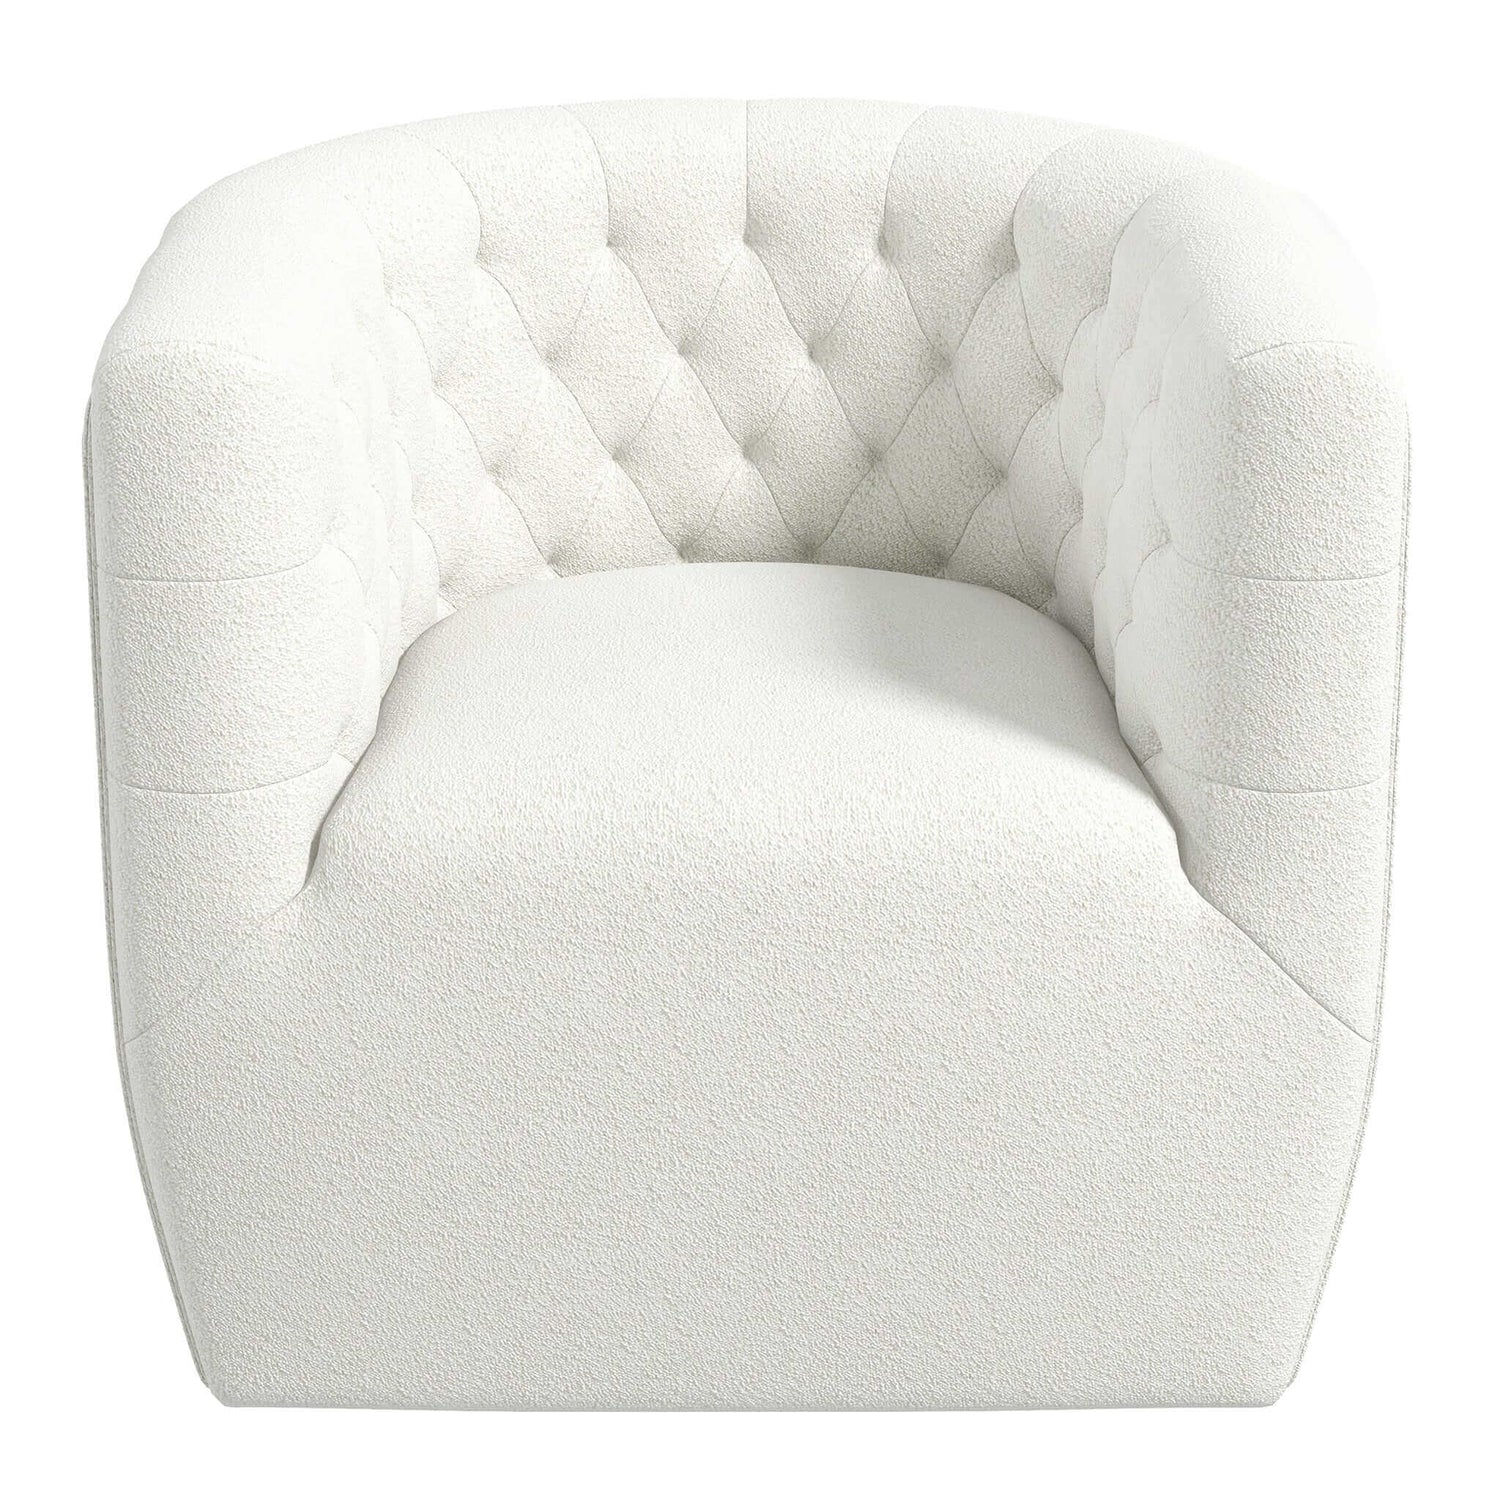 Mid-Century Modern Cream Boucle Swivel Chair.